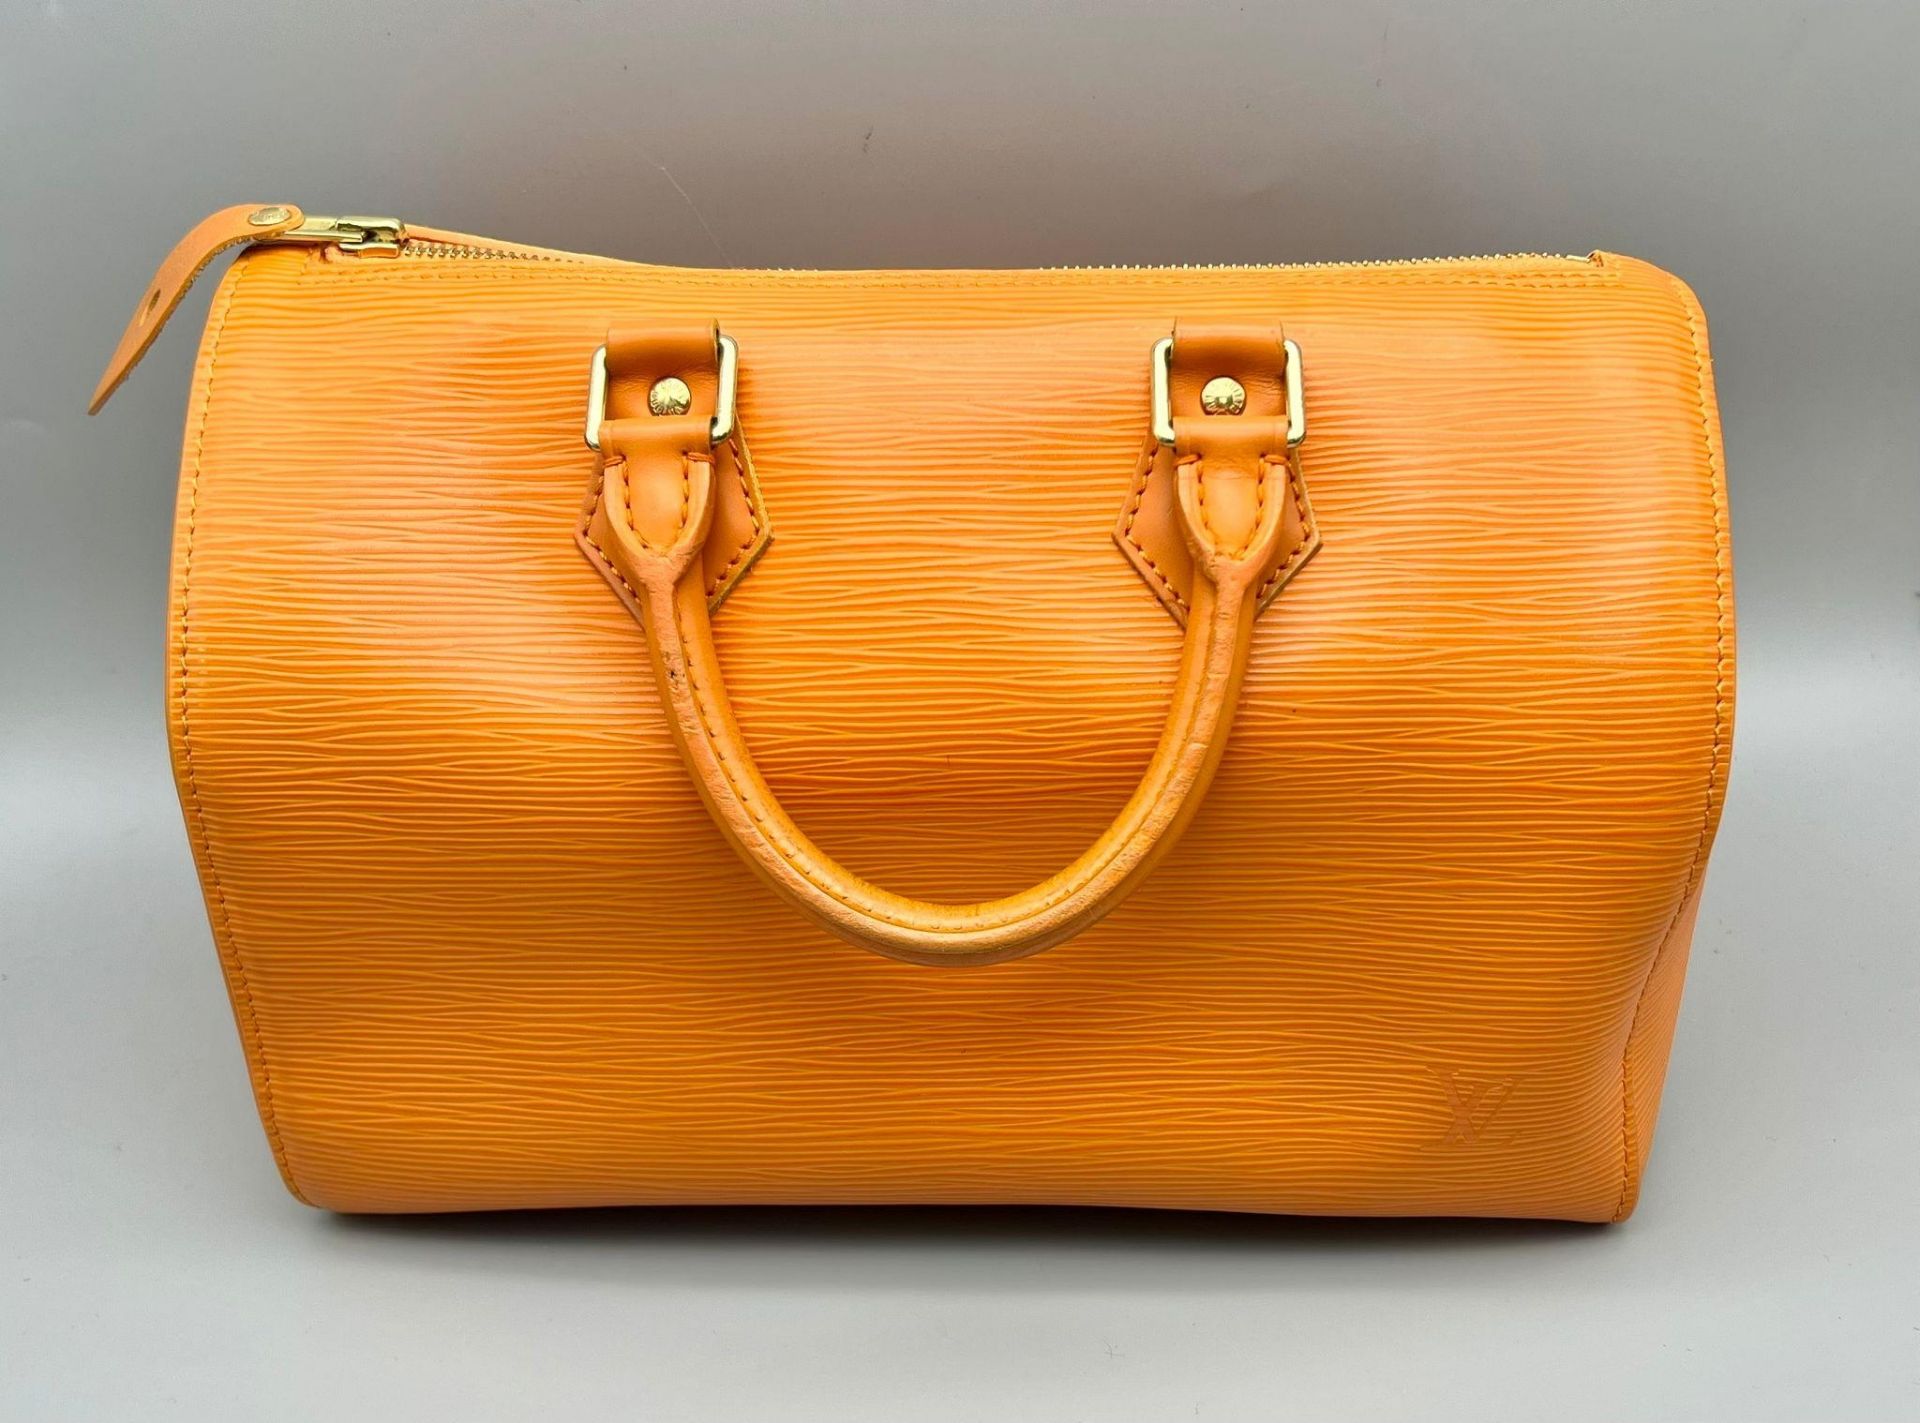 A Louis Vuitton Mandarin Epi Leather Speedy Bag. Twin handles with a zipped top. Orange textile